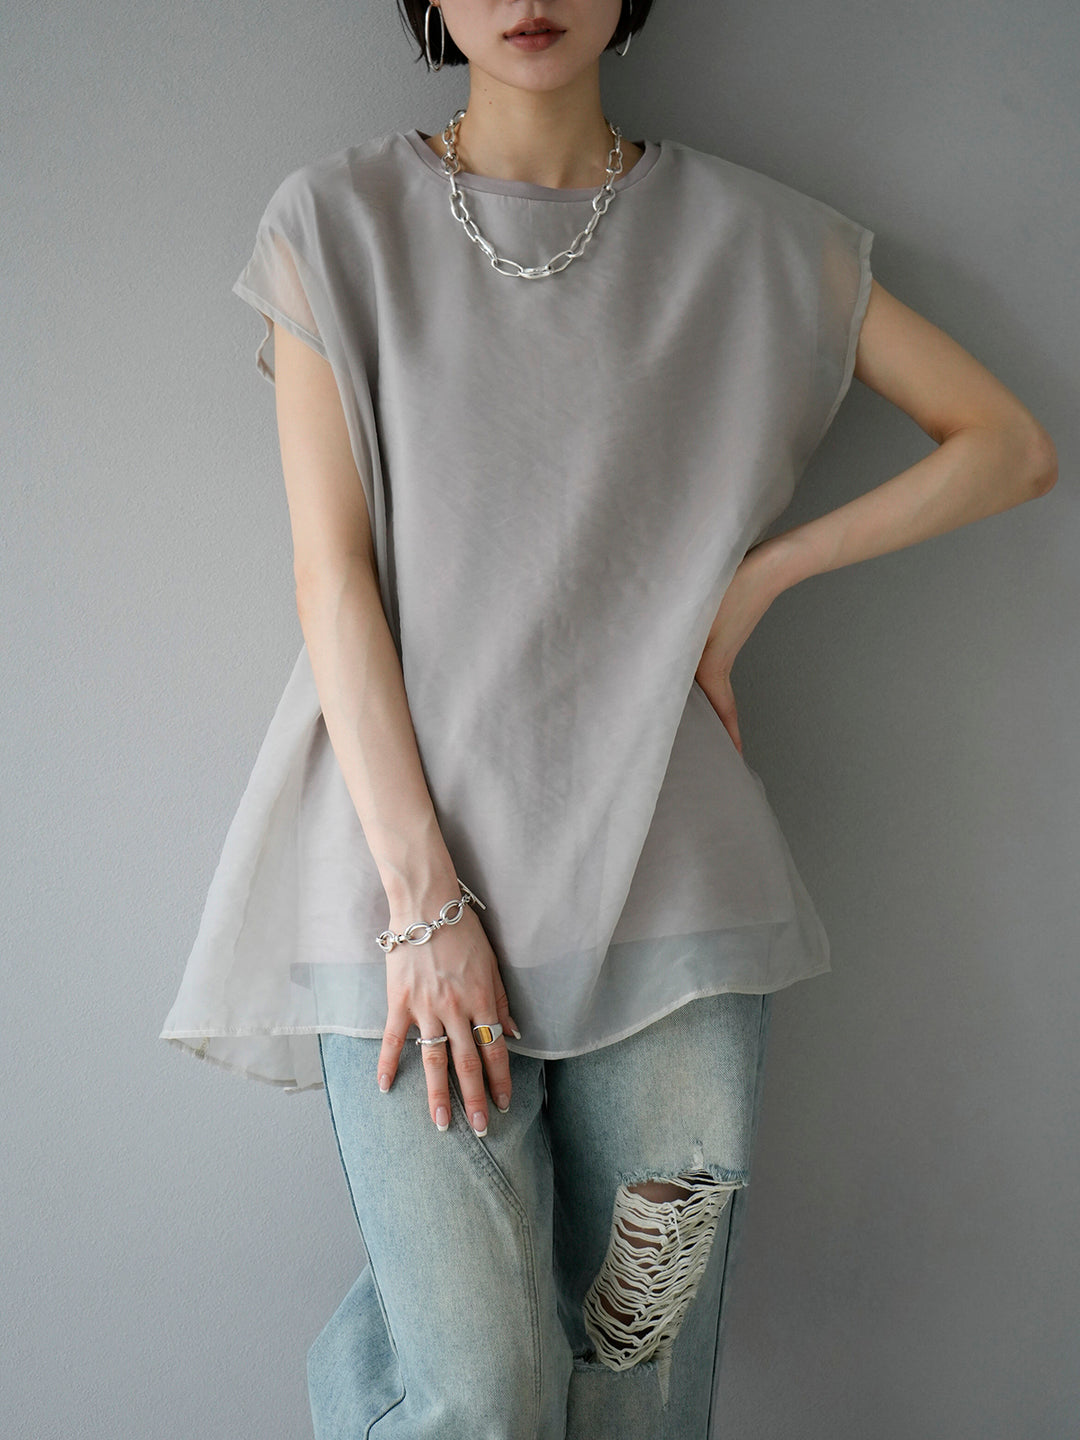 [Pre-order] Sheer layered sleeveless top/greyish beige